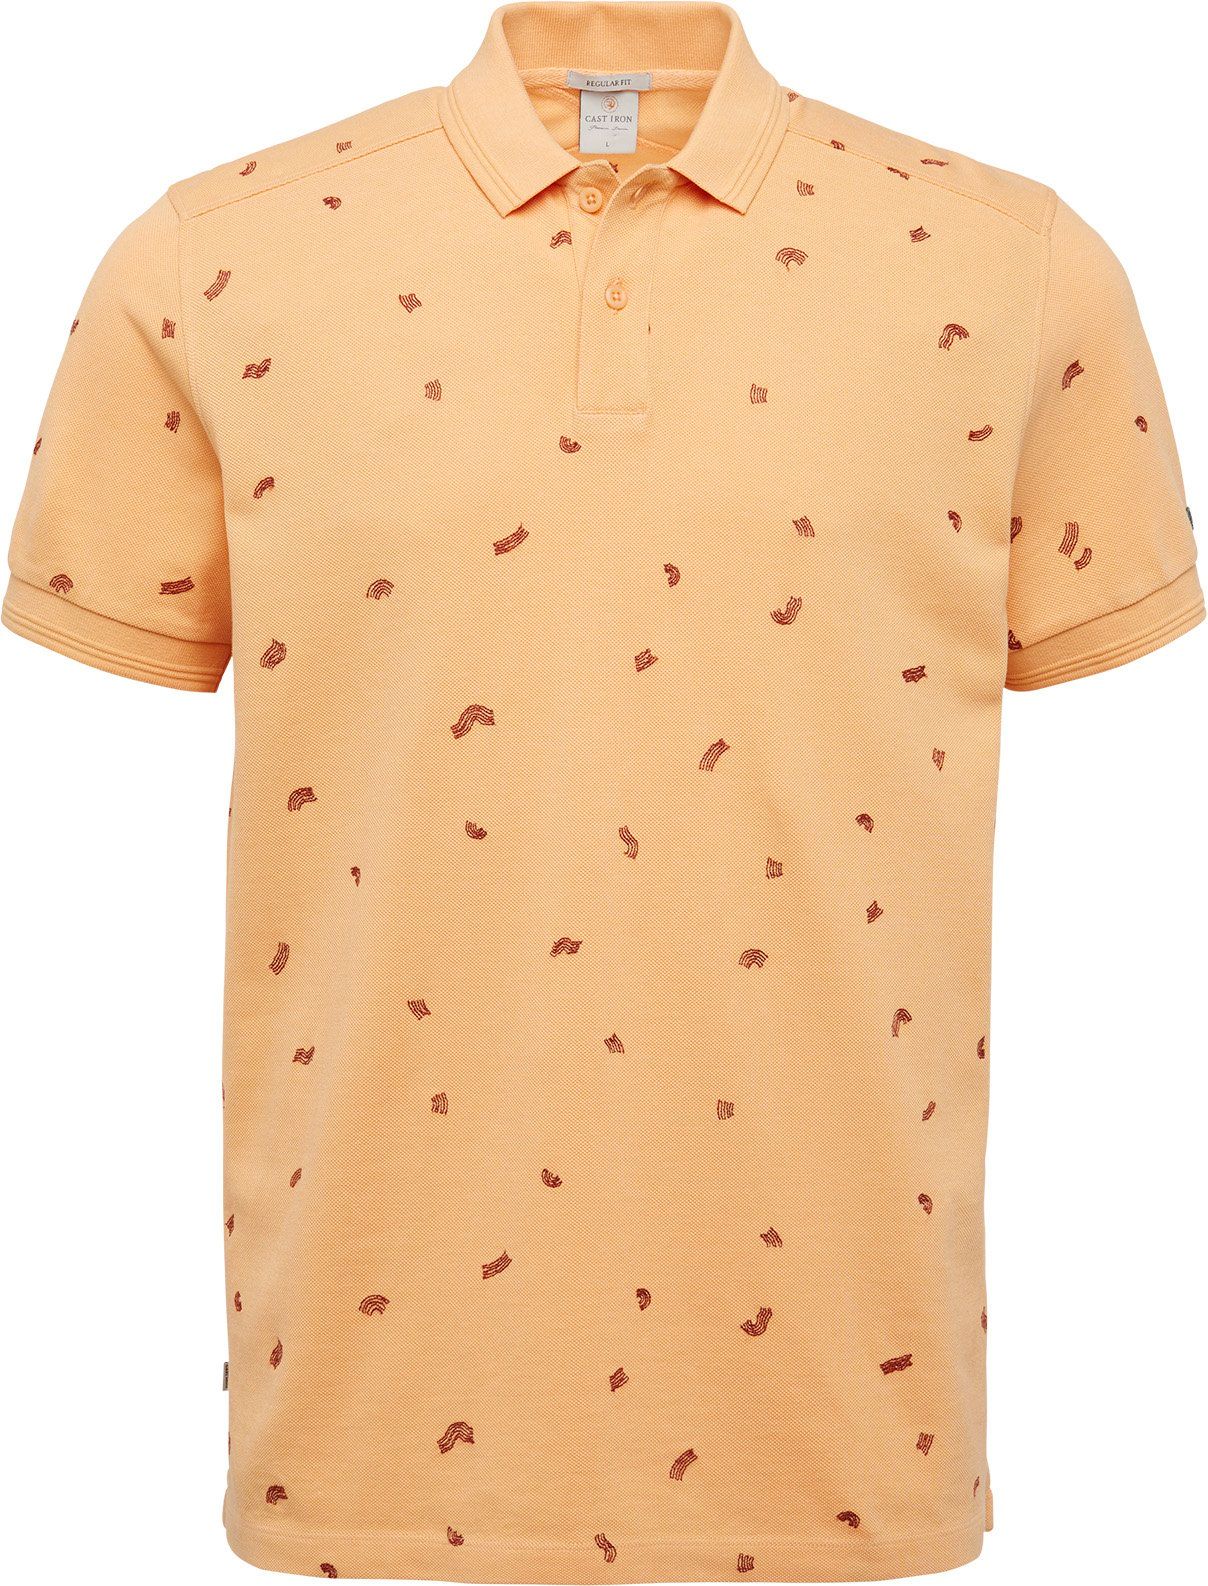 Cast Iron Polo Shirt Apricot Orange size L